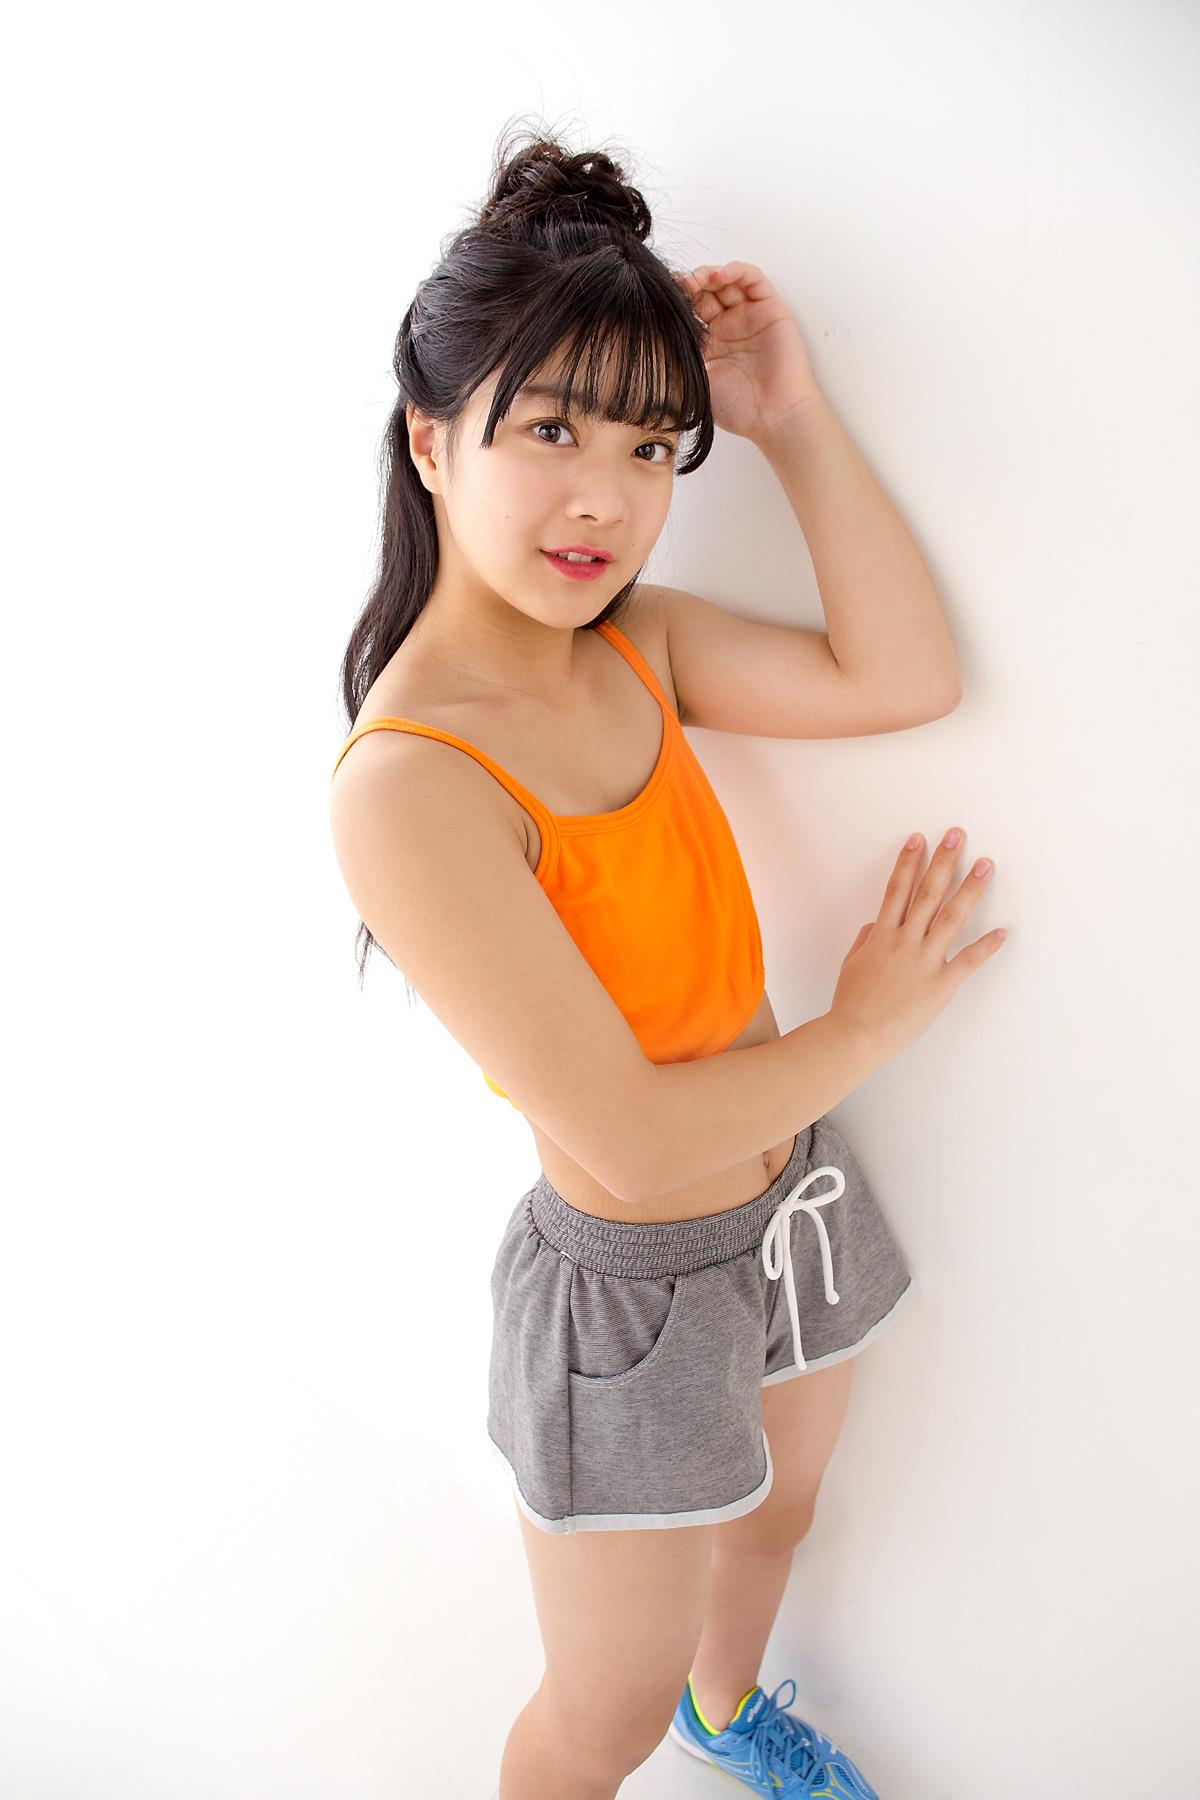 Minisuka.tv Saria Natsume 夏目咲莉愛 Premium Gallery 02 - 23.jpg